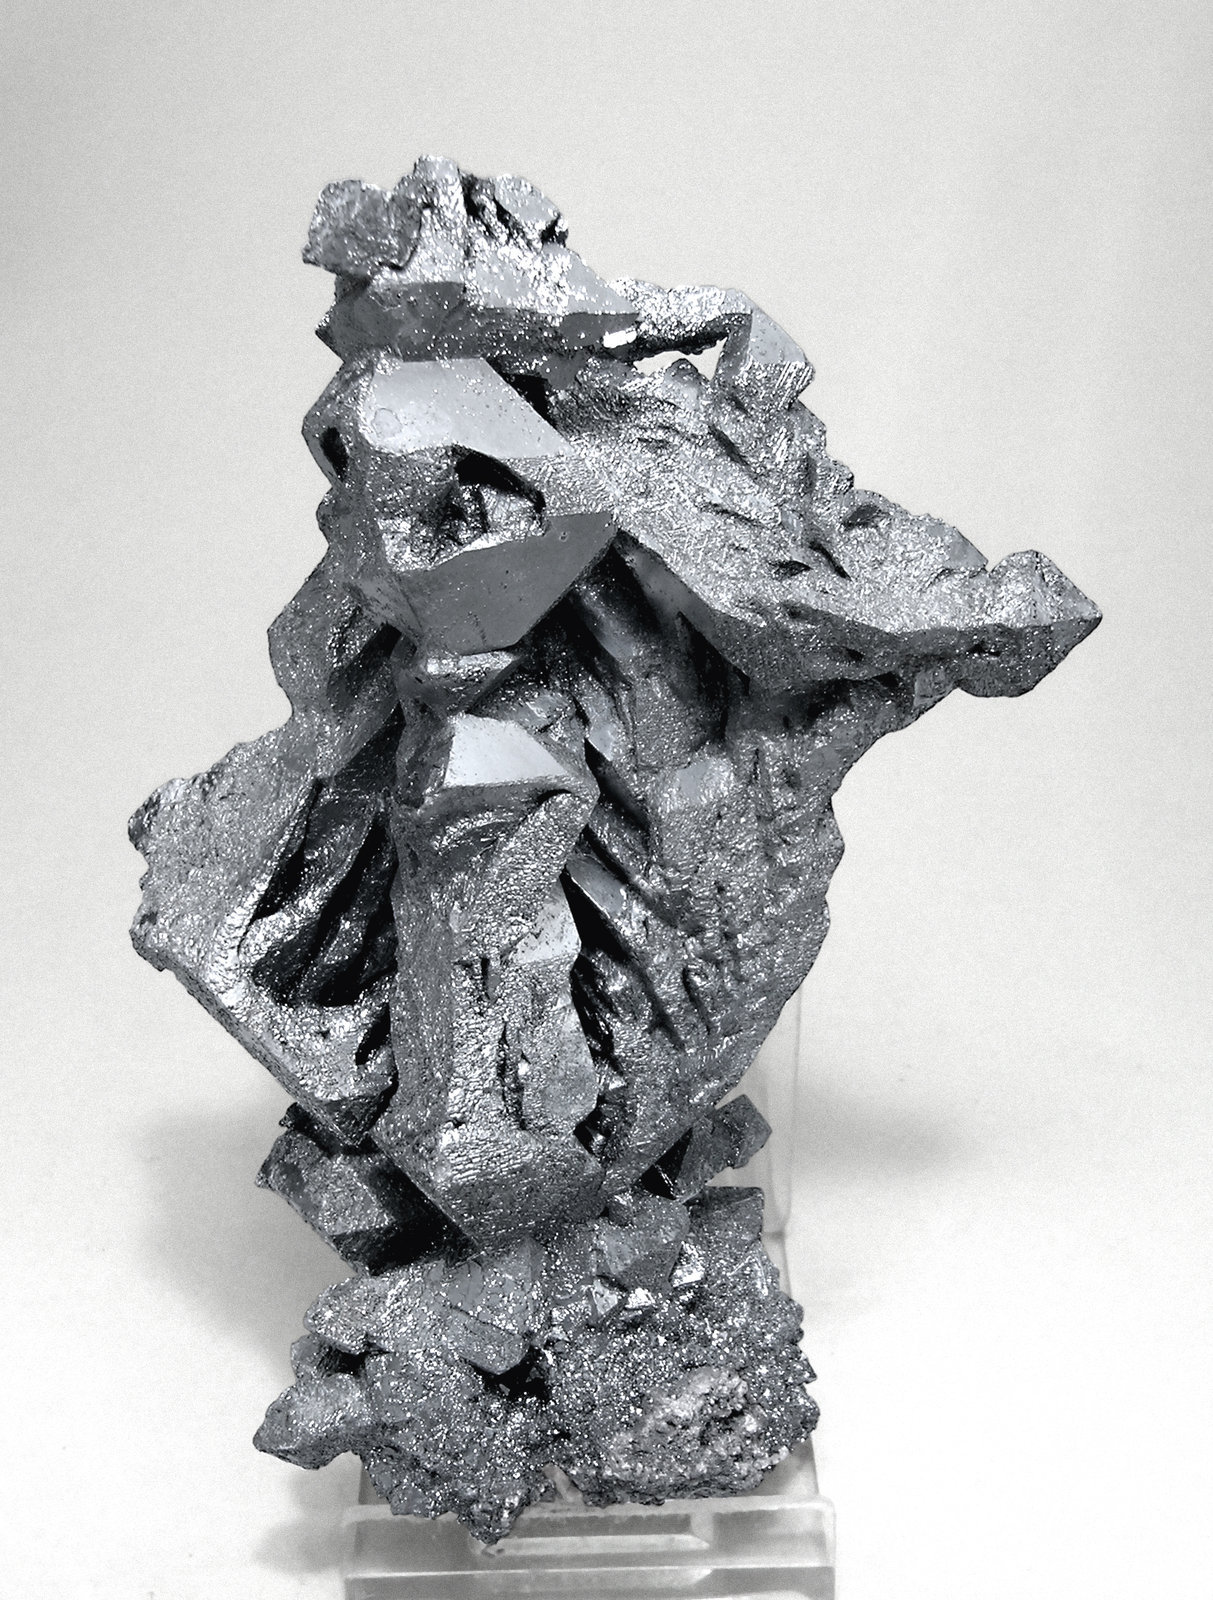 specimens/s_imagesM5/Hematite_Martite-EP96M5r.jpg